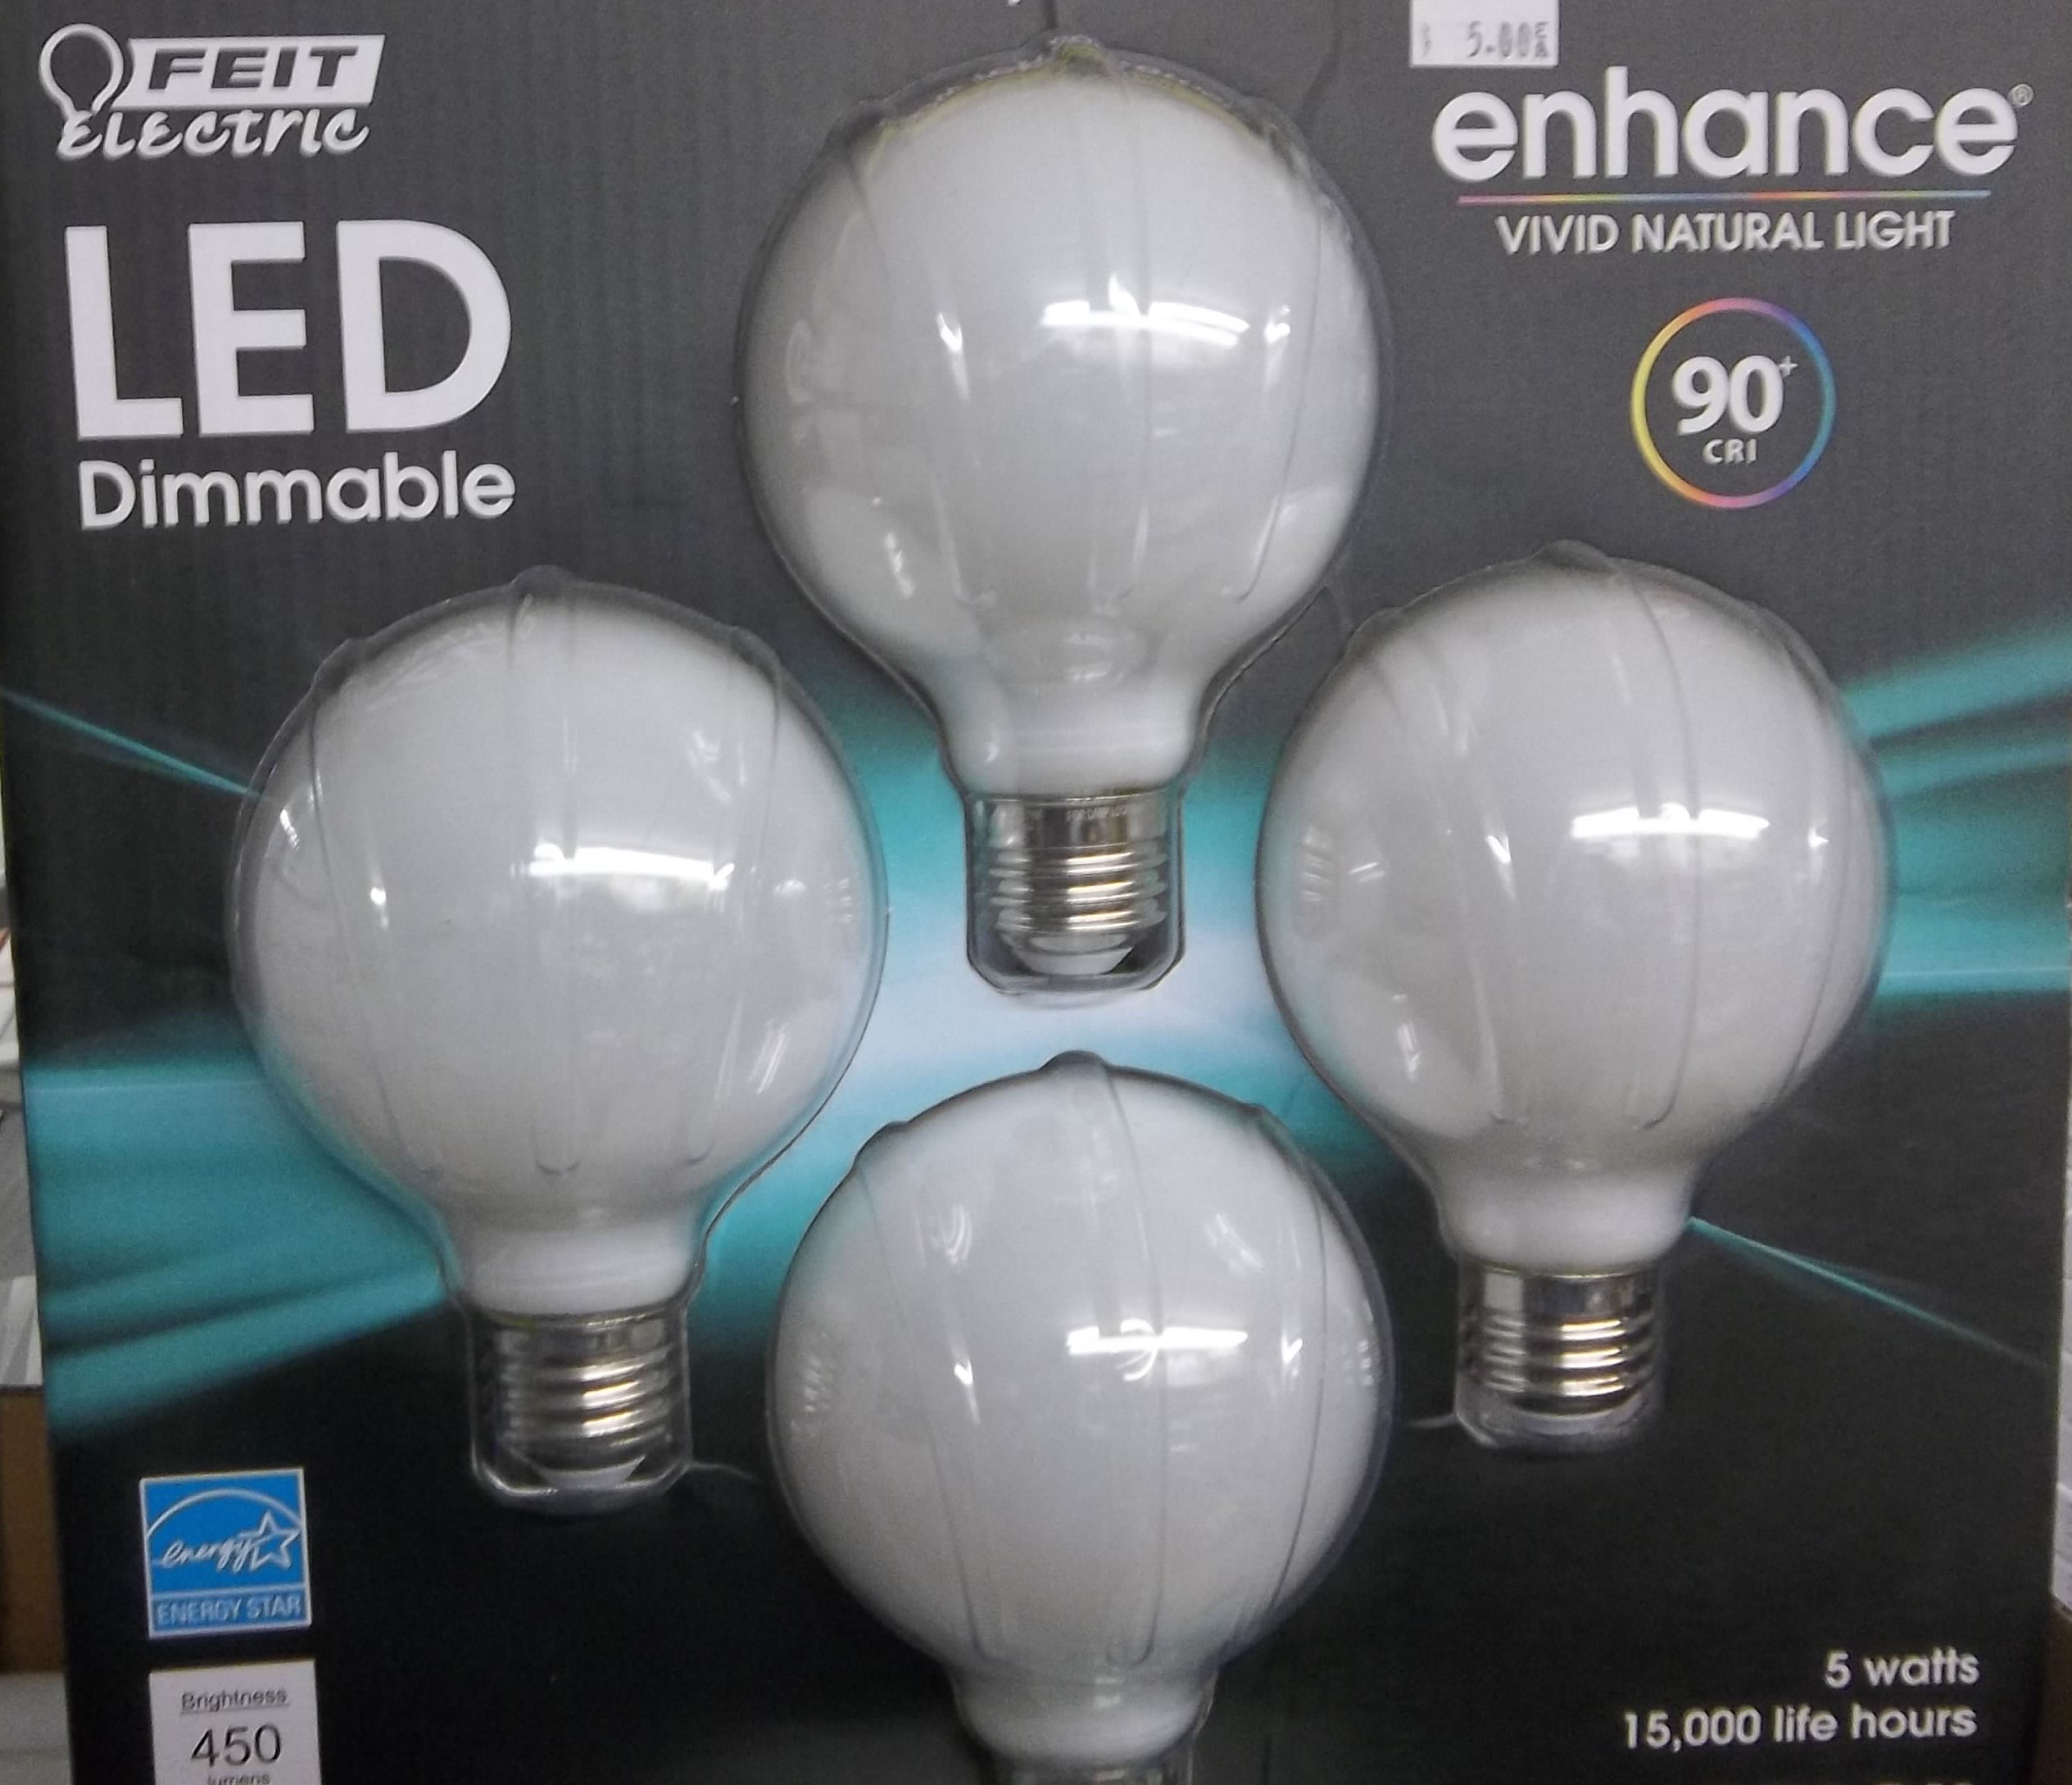 LED Dimmable light bulb